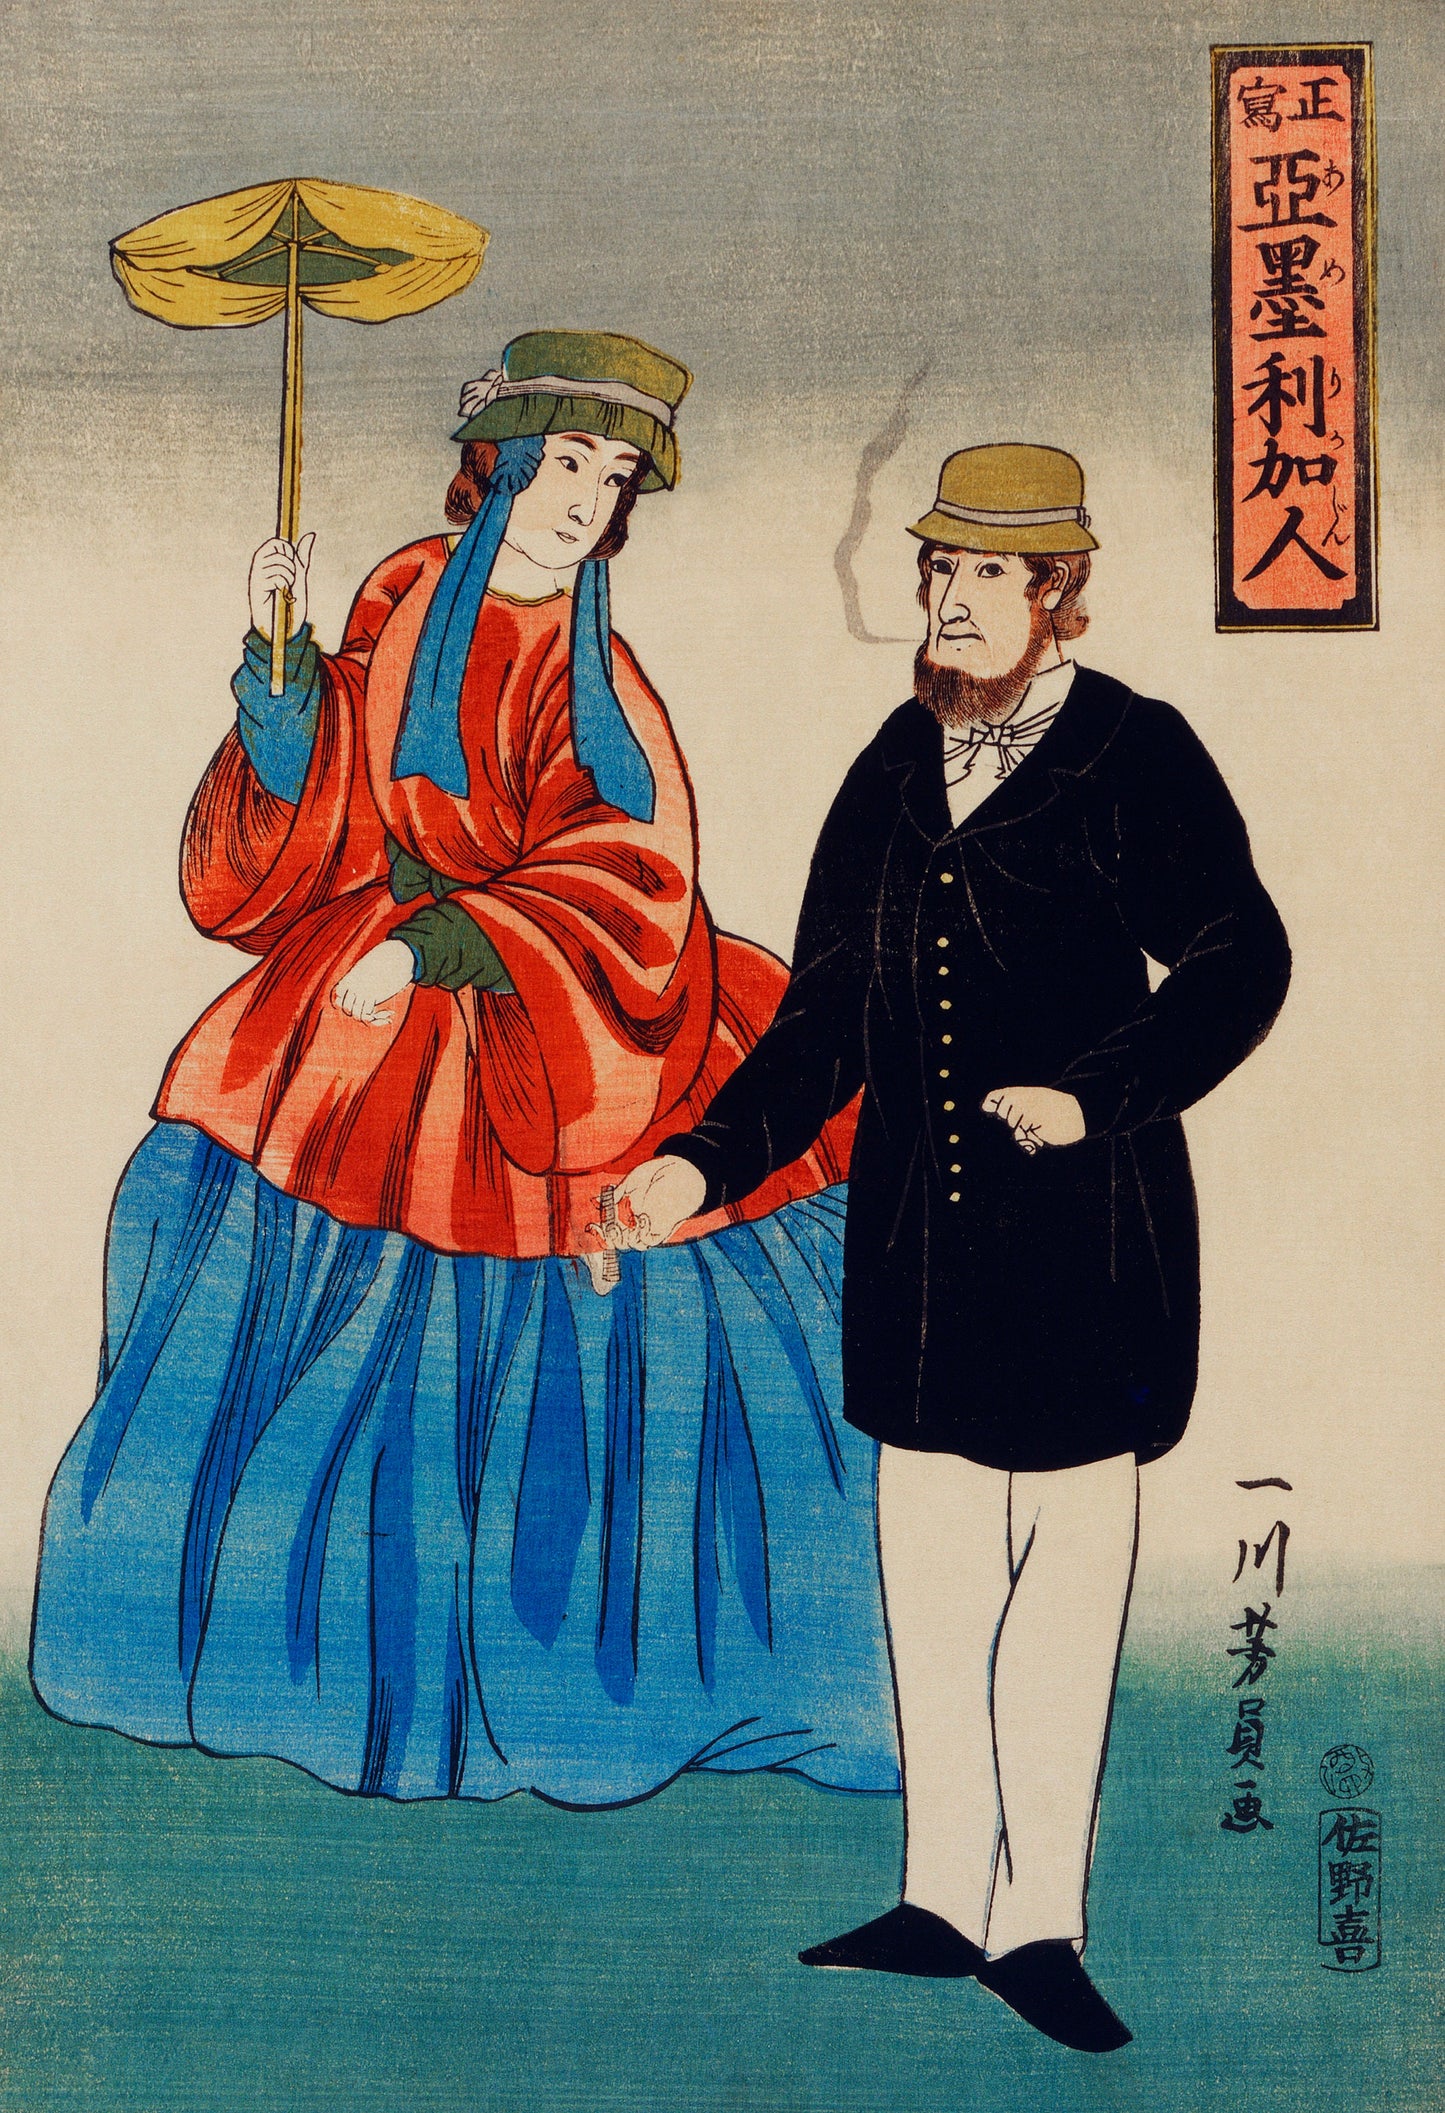 Utagawa Yoshikazu Ukiyo-e Woodblock Prints [16 Images]